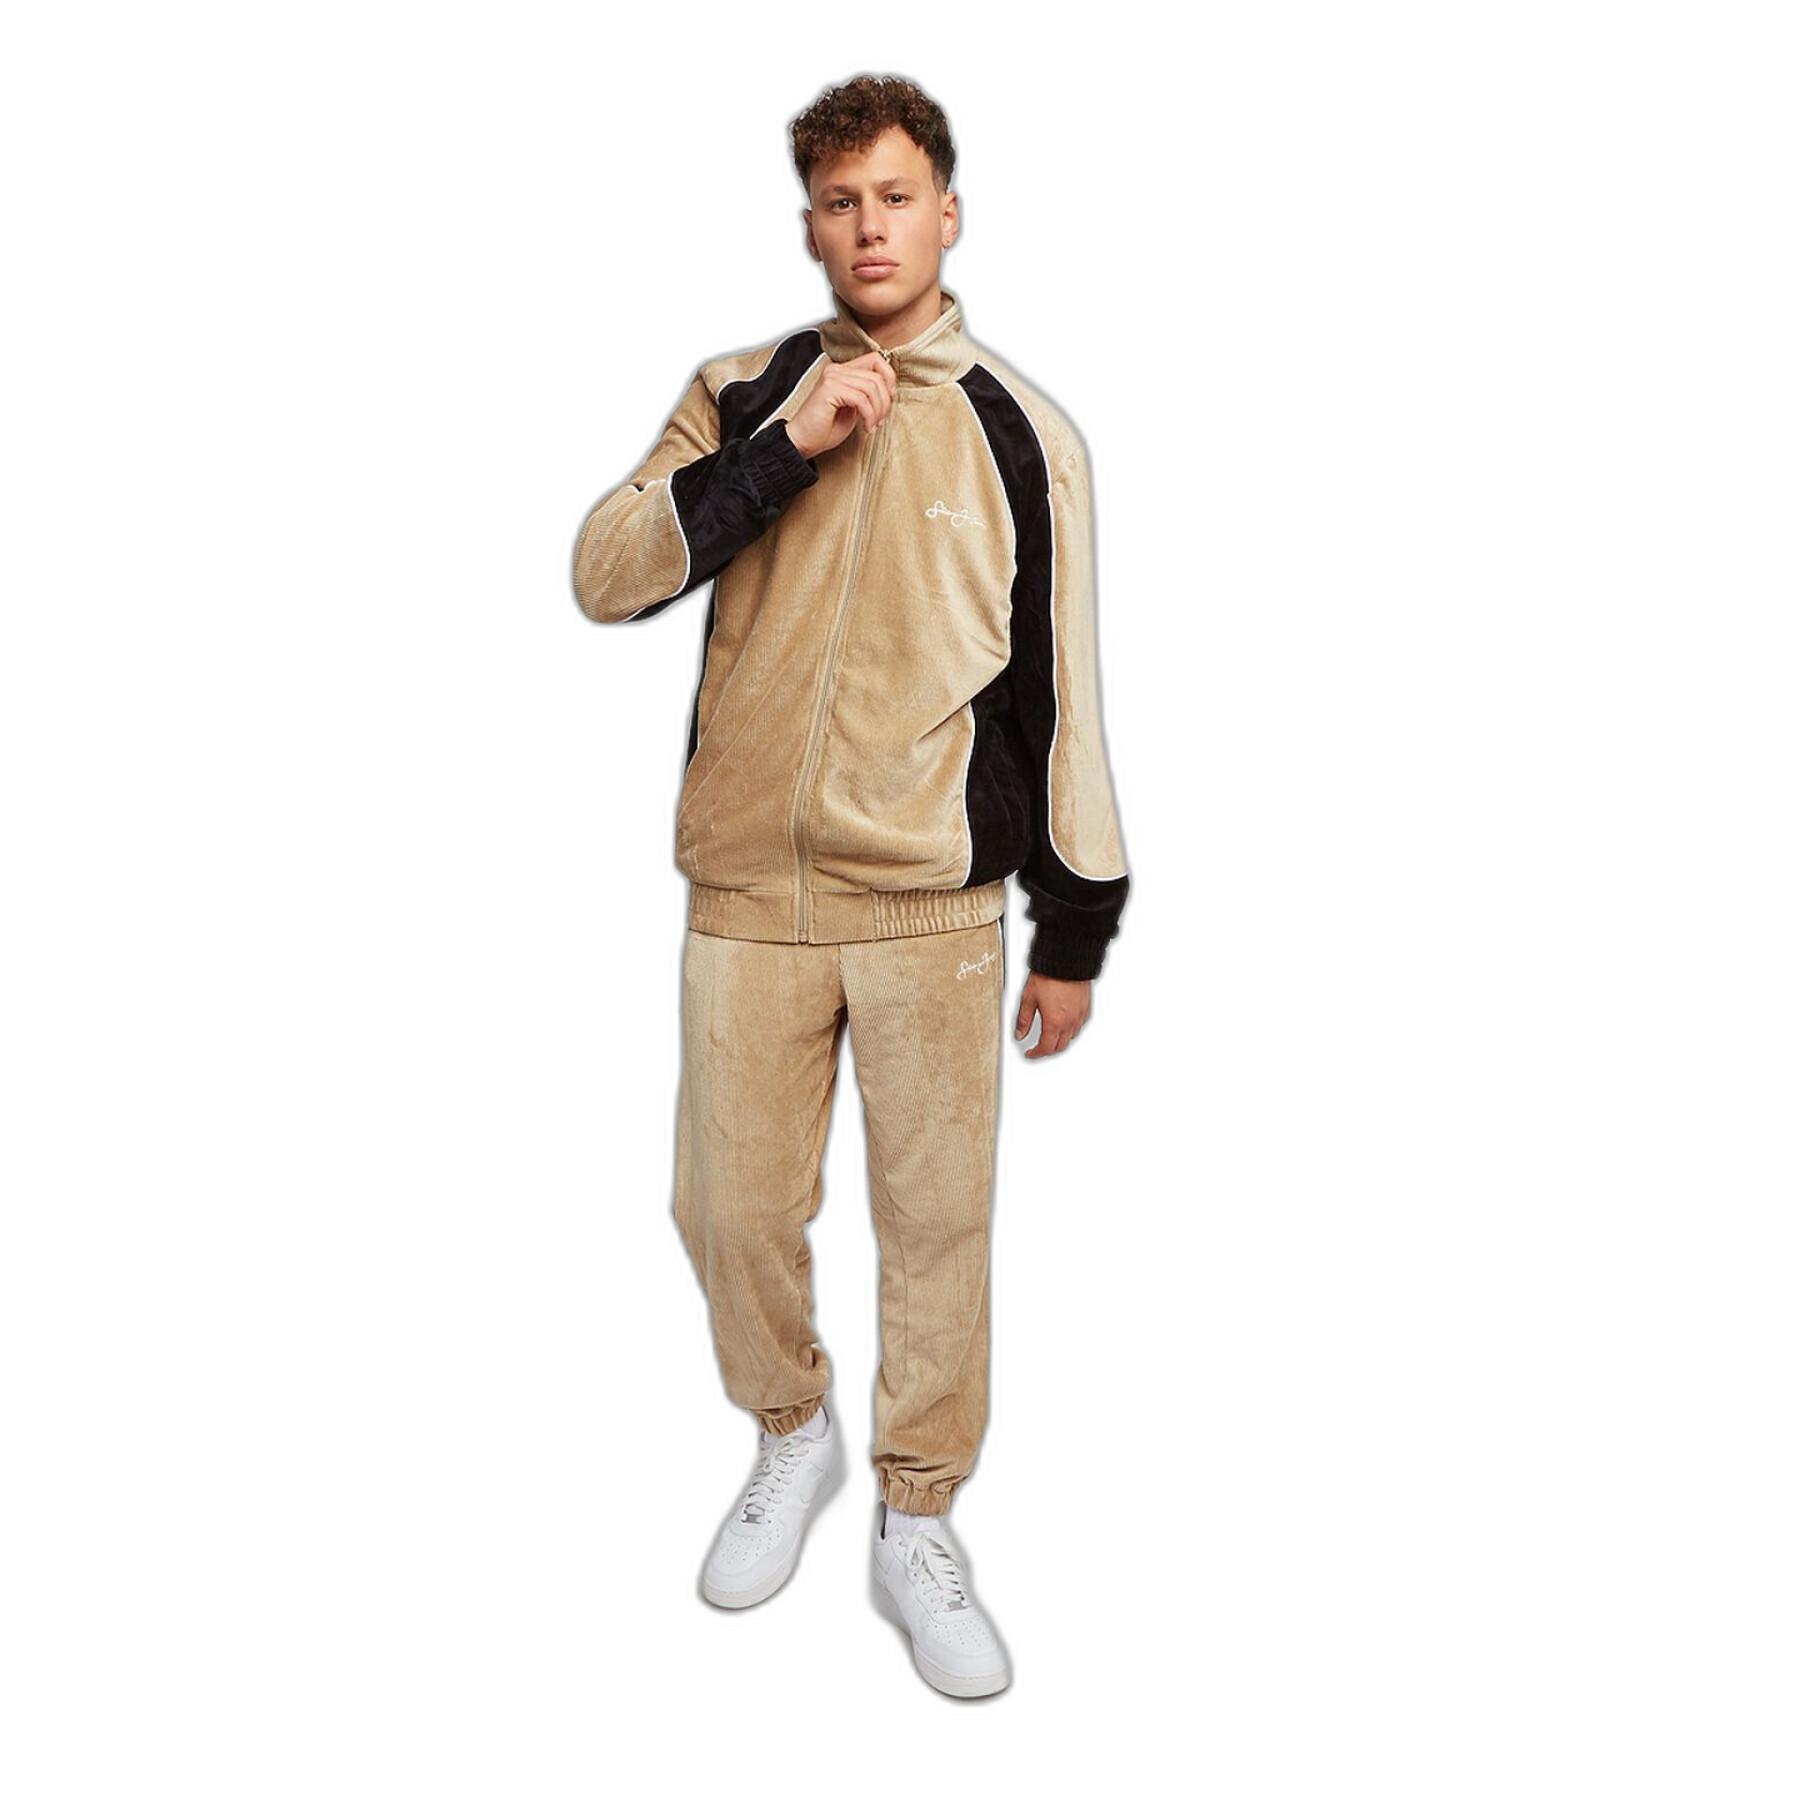 Velvet jogging suit Sean - Script - John - Logo Jogging Men Clothing